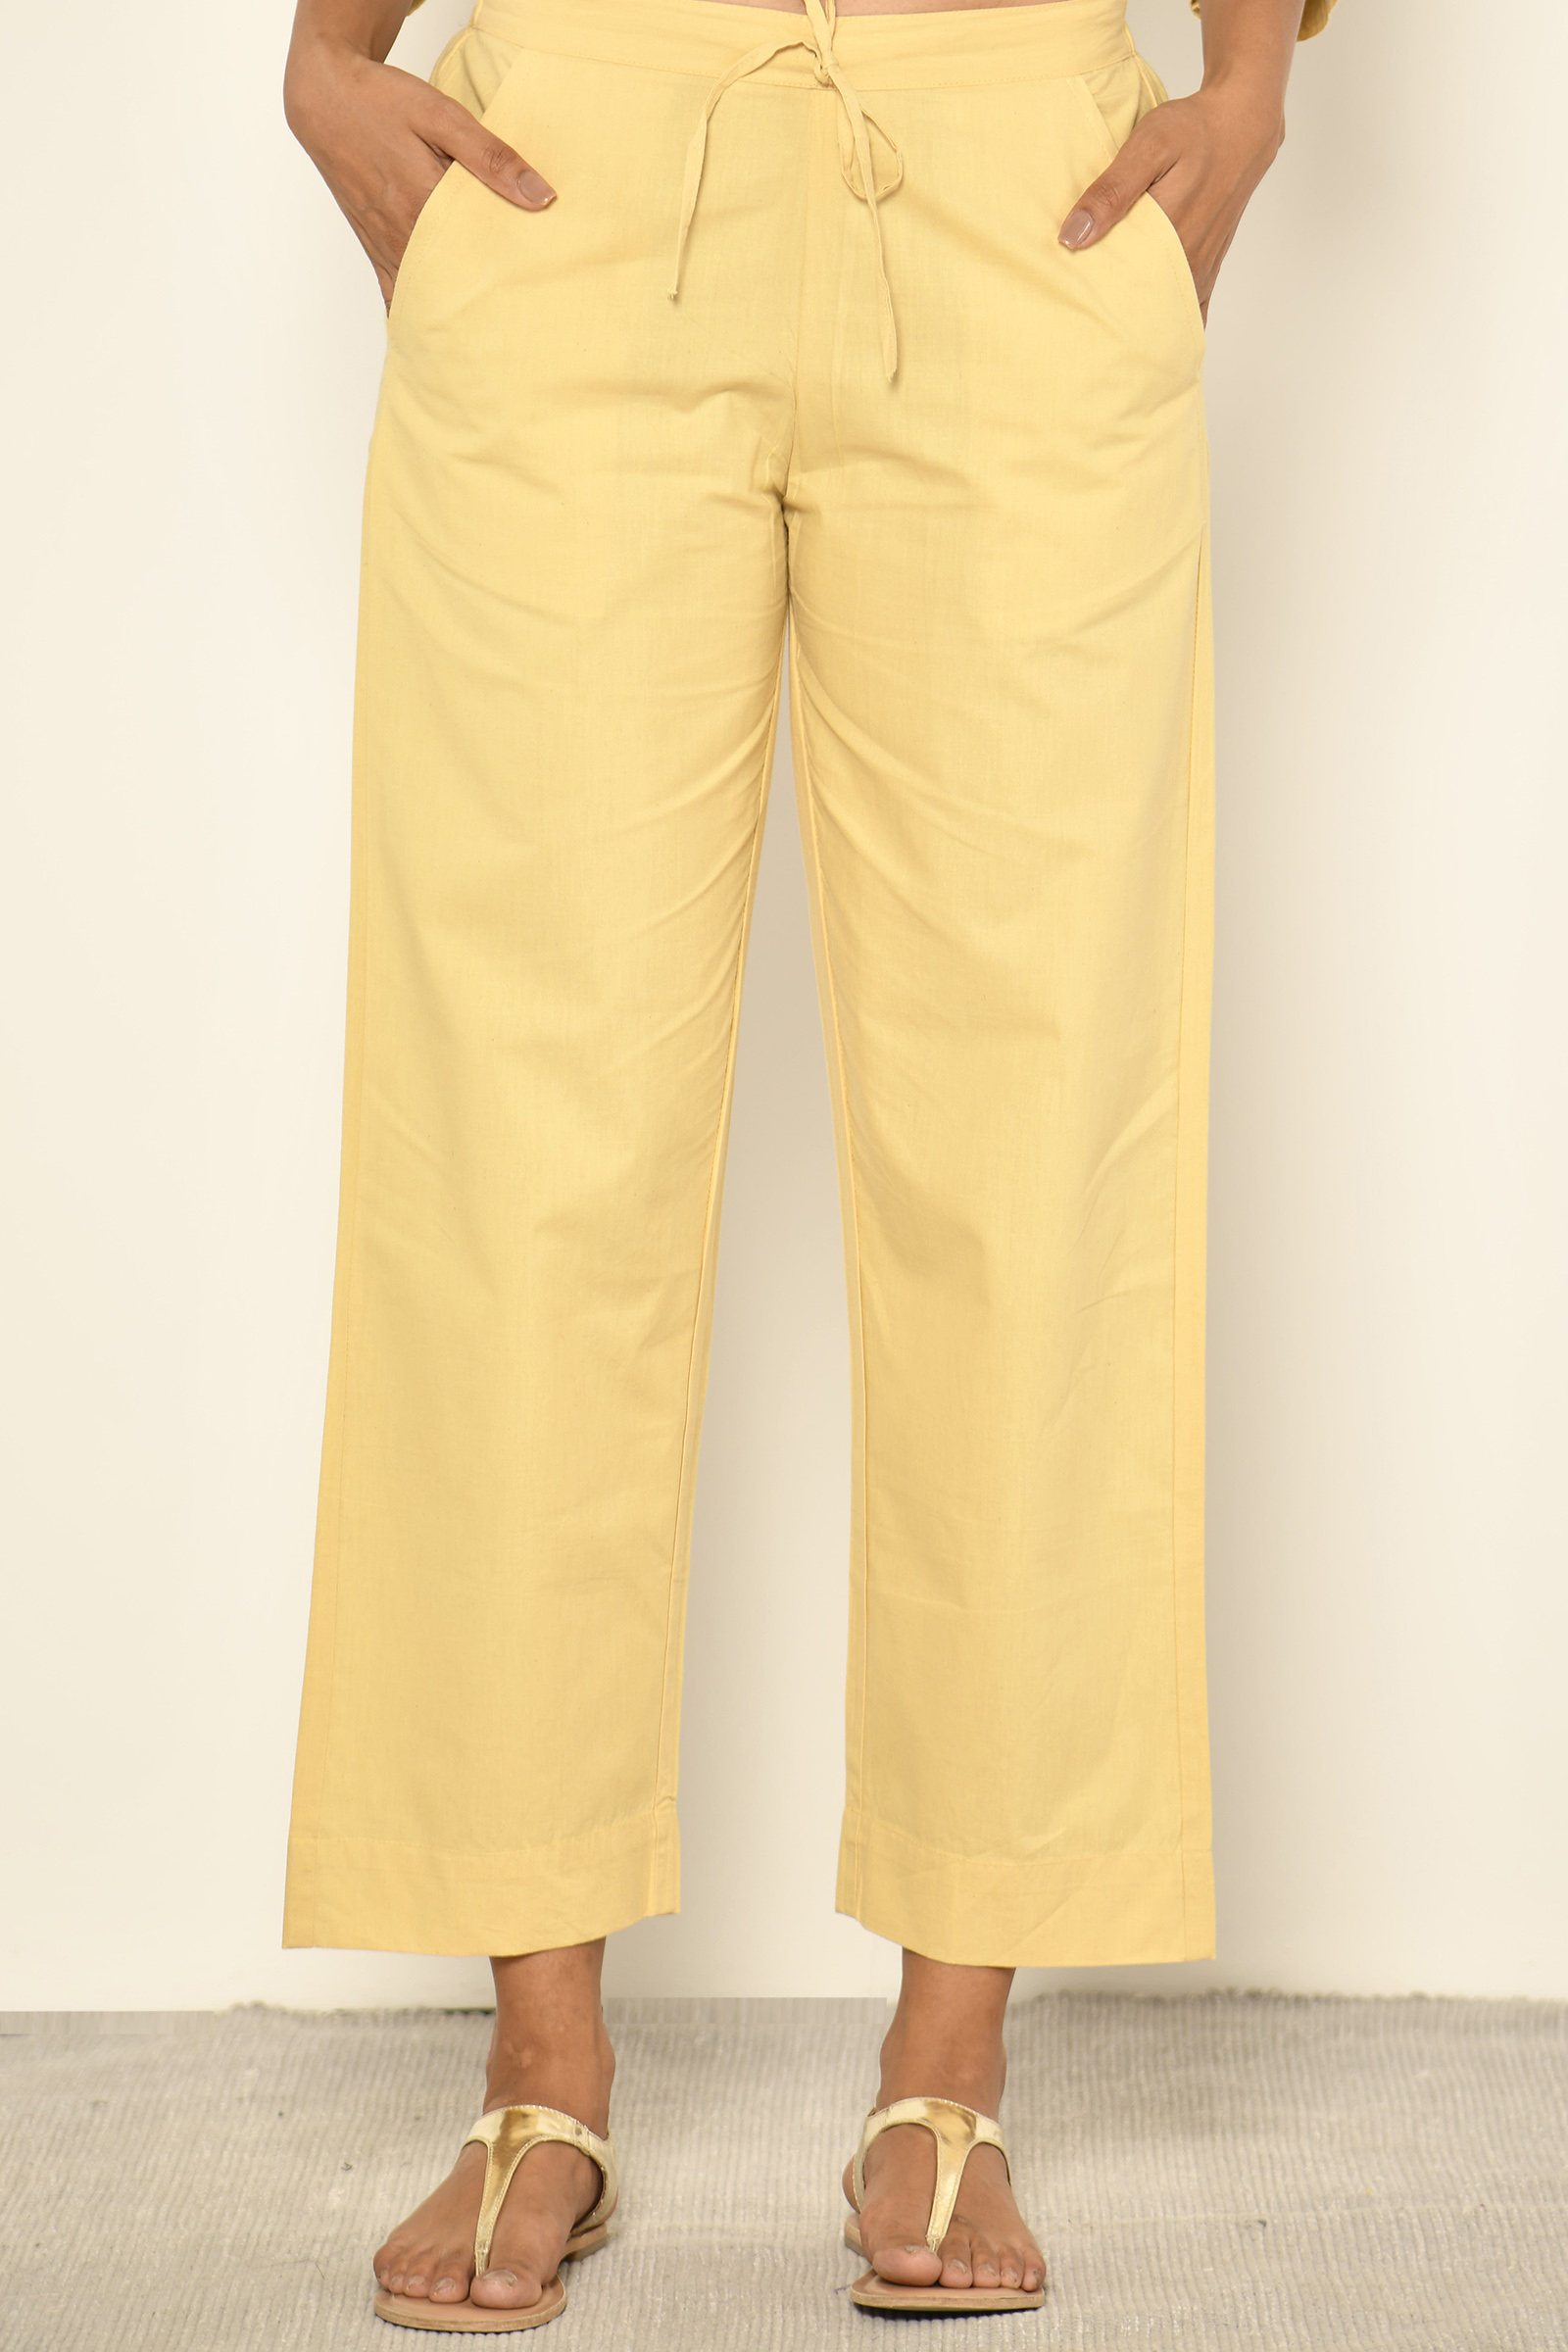 Buy FMK Men's Formal Regular Fit Cotton Blend Light Grey Trouser (28) at  Amazon.in